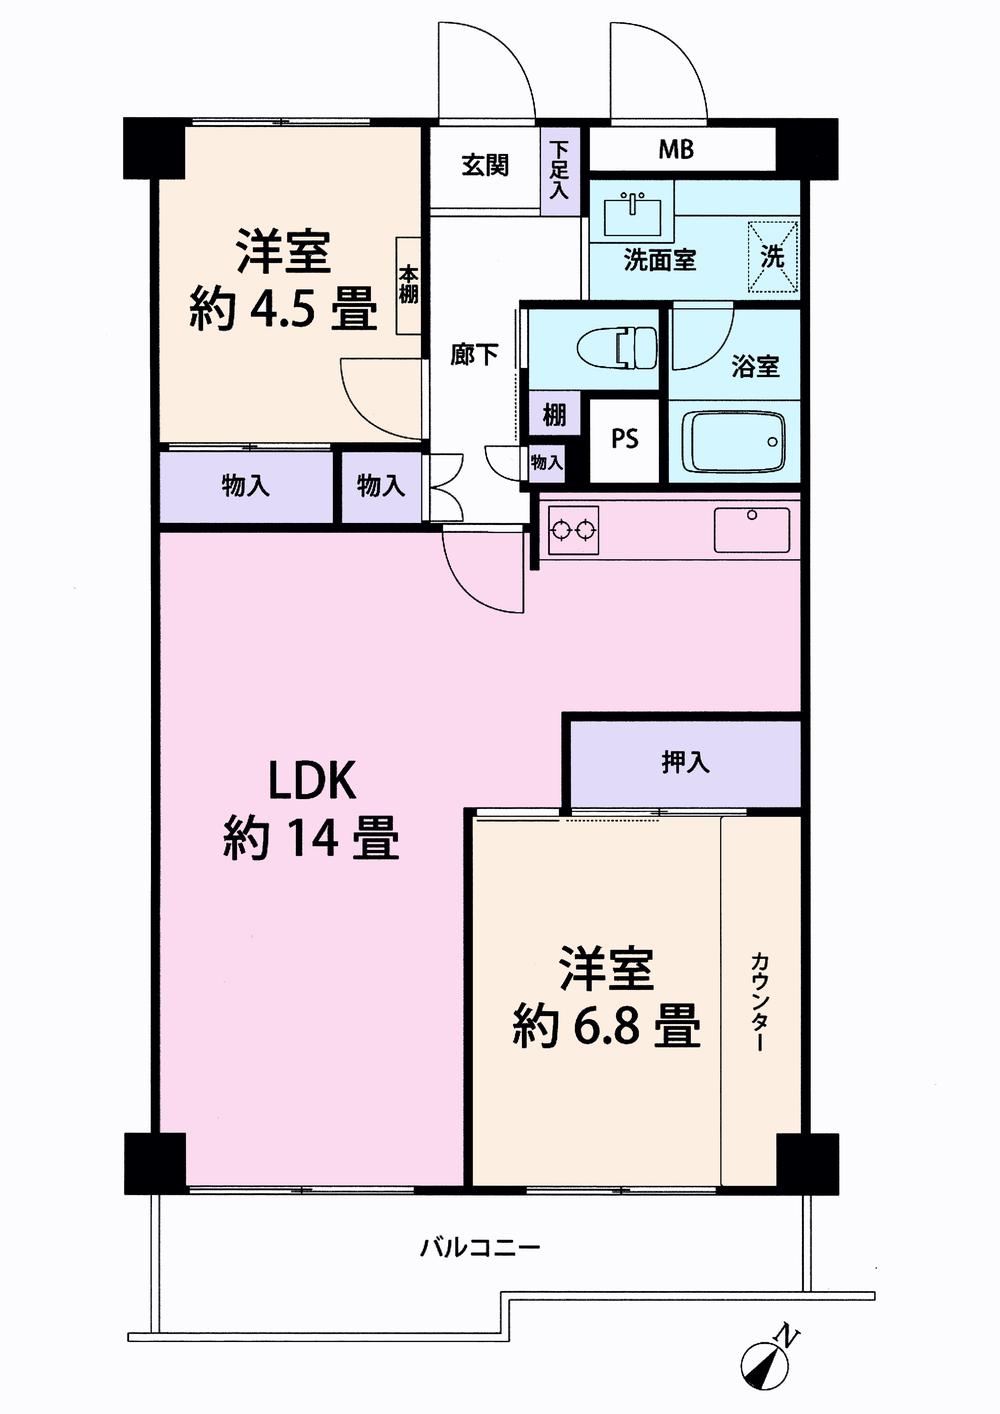 Floor plan. 2LDK, Price 11 million yen, Footprint 61.2 sq m , Balcony area 7.28 sq m